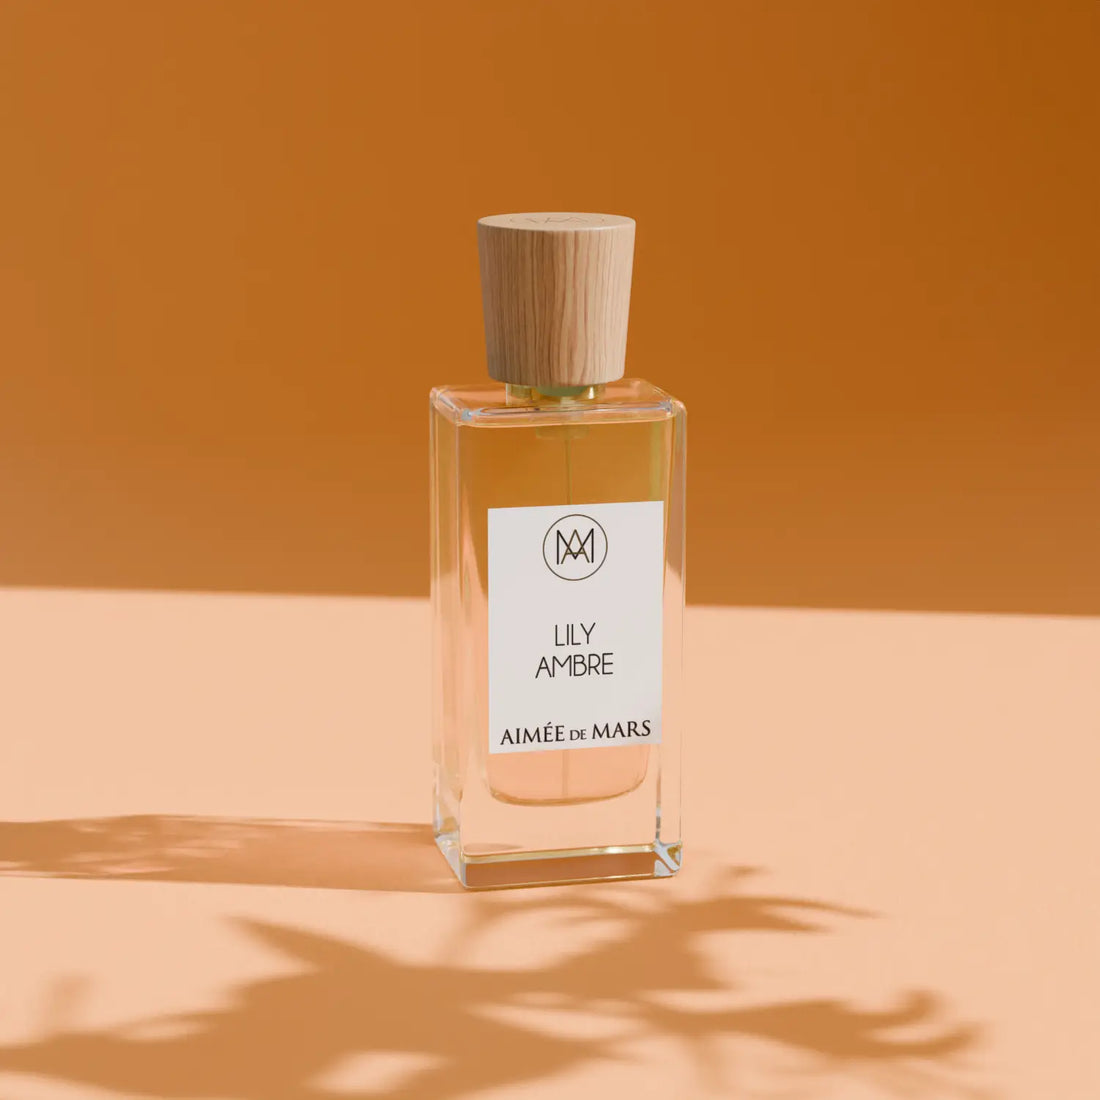 Lily Ambre fragrance